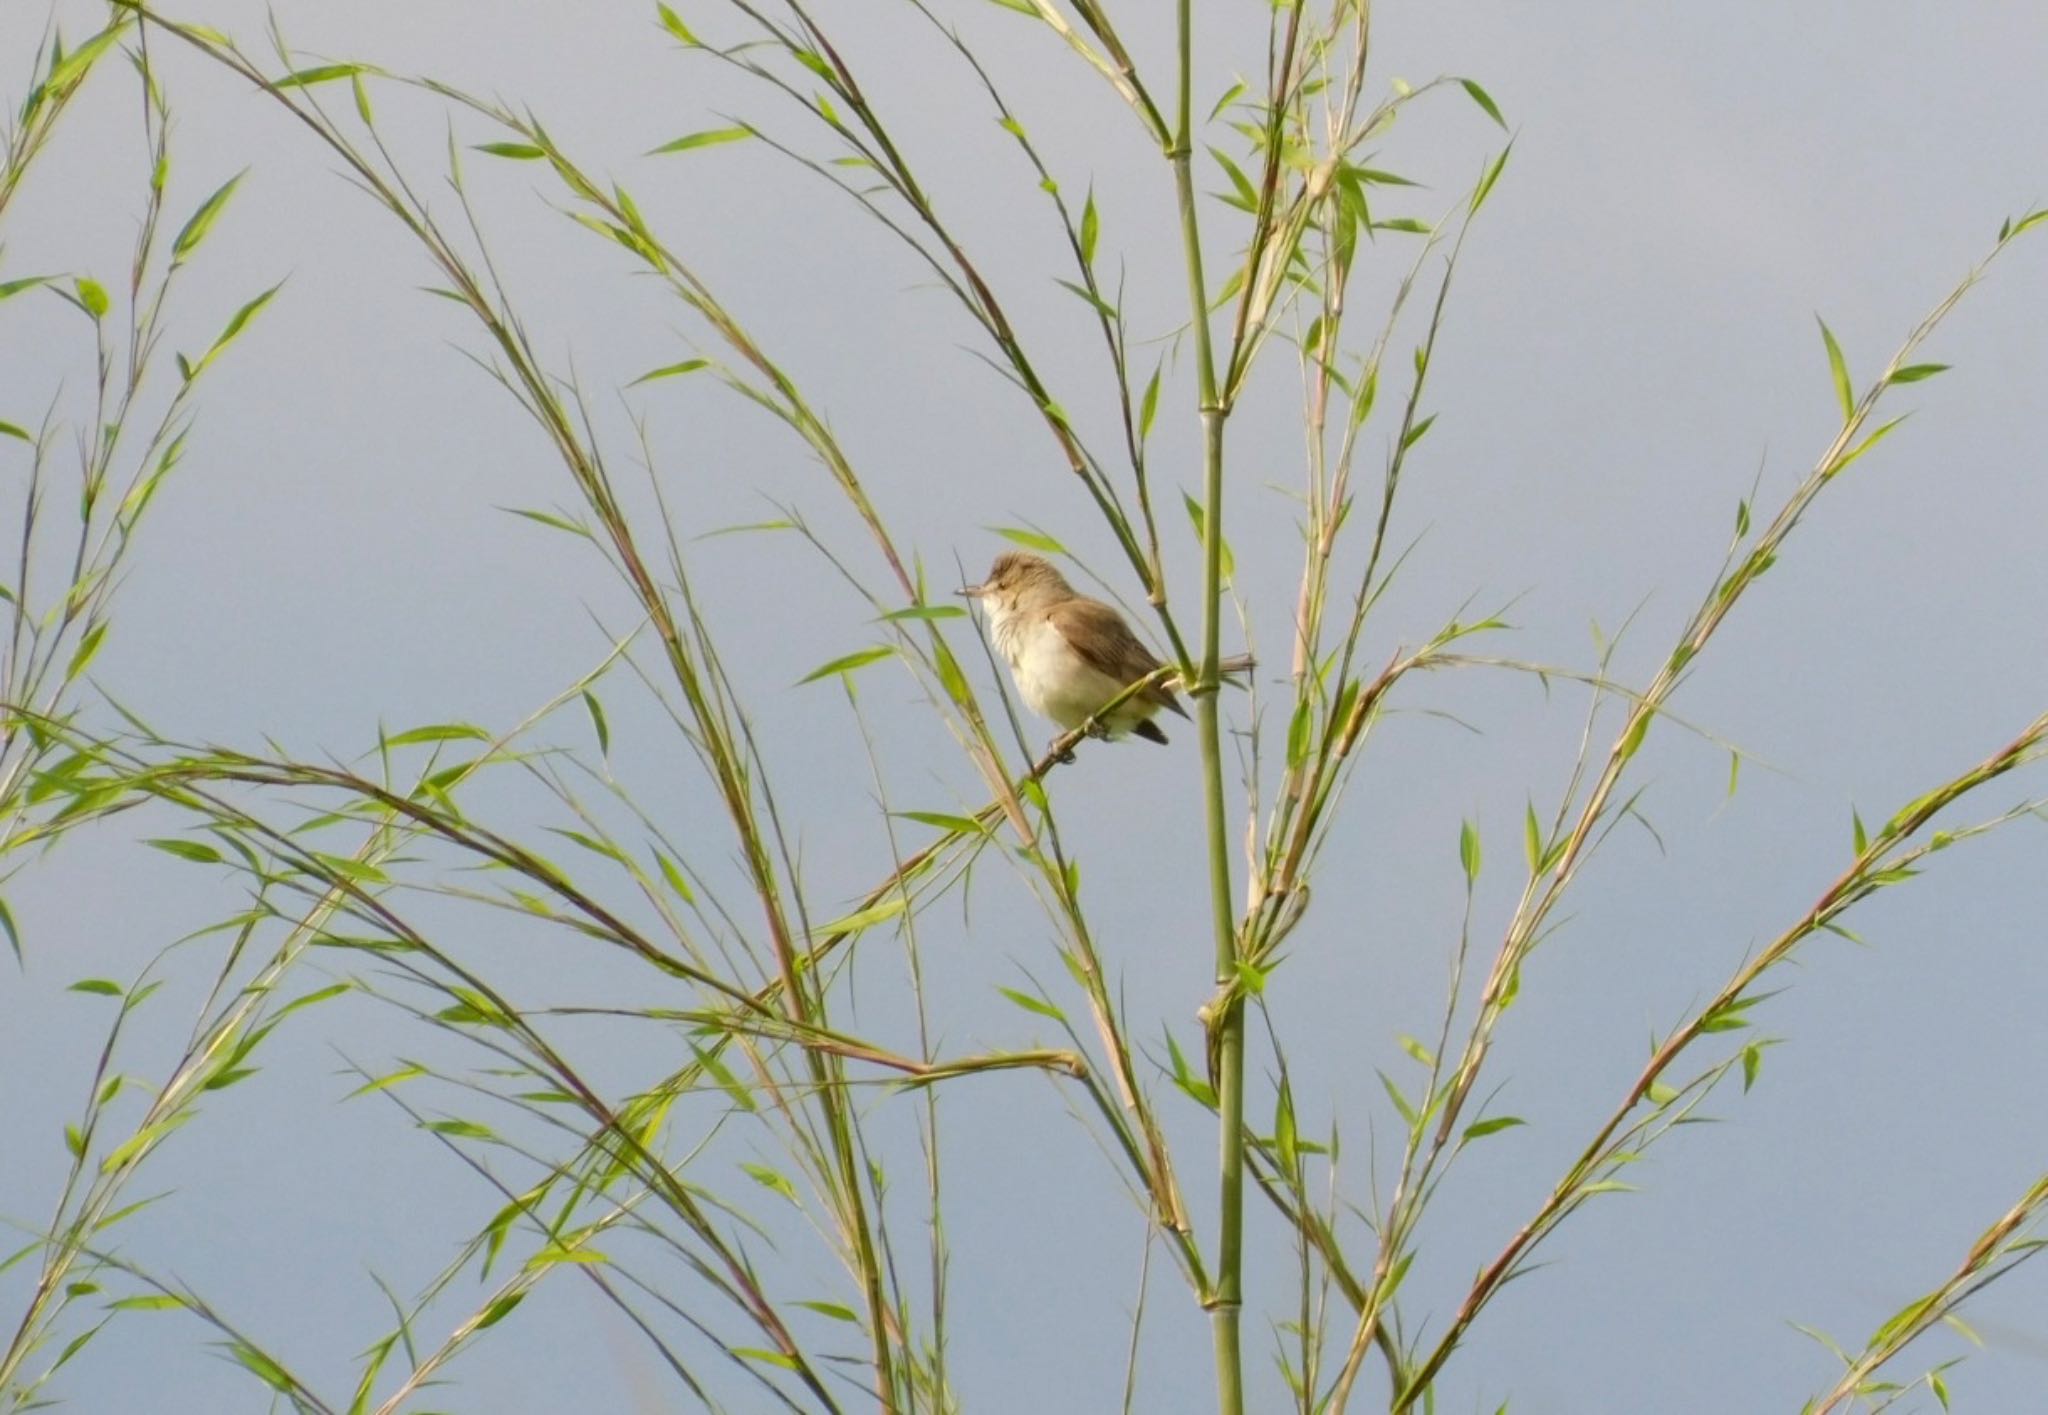 Photo of Oriental Reed Warbler at Watarase Yusuichi (Wetland) by Untitled